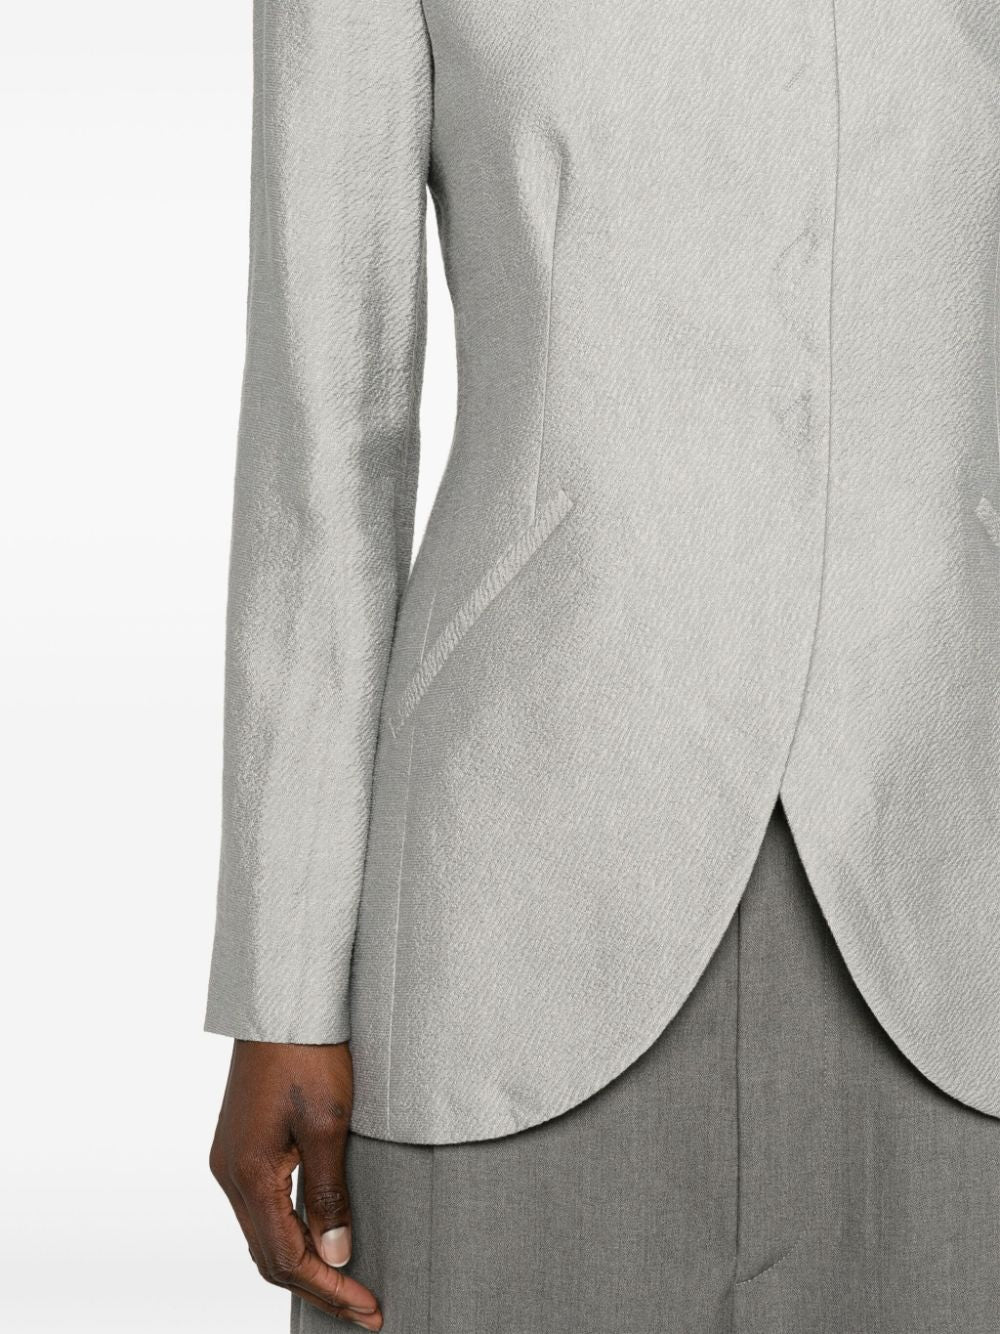 EMPORIO ARMANI Heather Grey Textured Blazer Jacket with Button Detailing & Dart Accents for Women